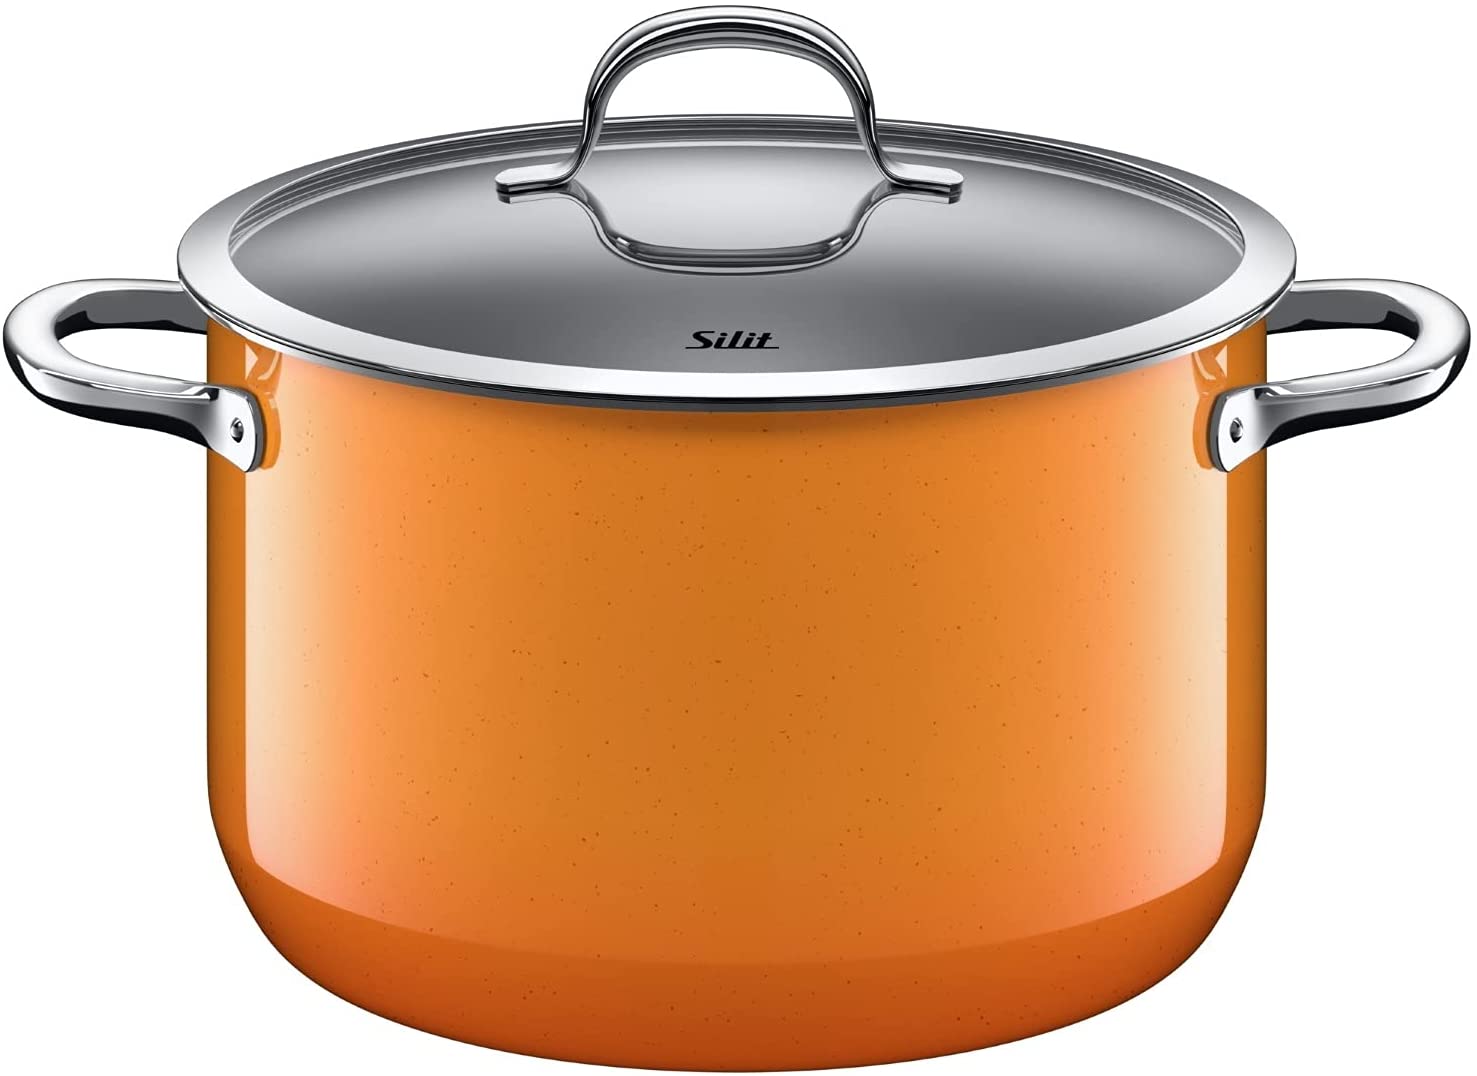 Silit Passion Orange cook / - high casserole, 24 cm, glass lid, 6.4l, Silargan functional ceramics, induction pot, orange